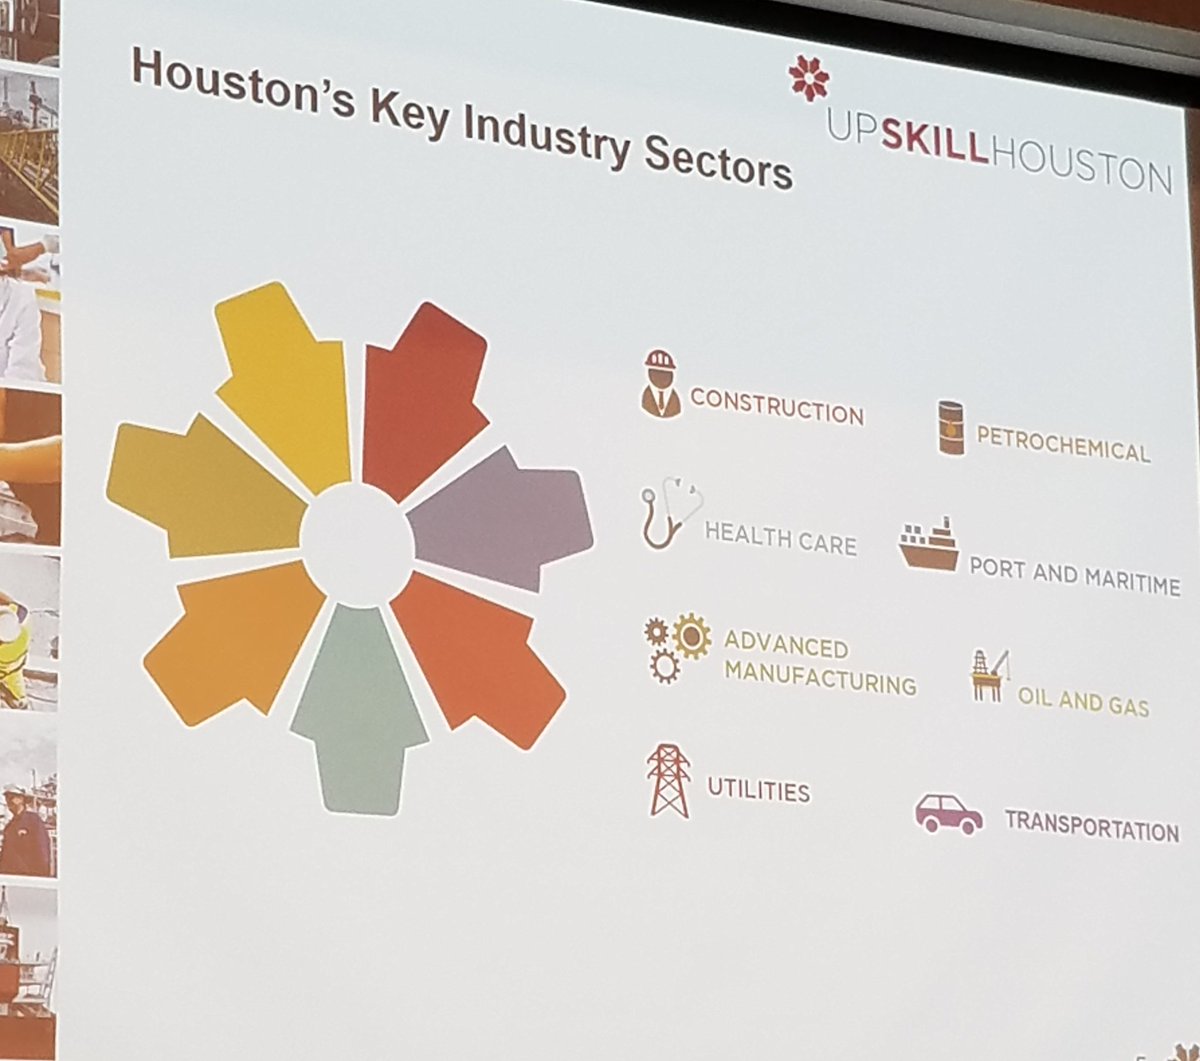 Lunch speaker Susan Moore @GHPartnership @UpSkillHouston discussing the 'Two Gap Challenge' - skills & people - for Houston region workforce demands @Region4ESC #R4Counselors #highdemandcareers #skilledworkforce @PGRADHouston @GRADcafeBaytown @cafecollegehou #partnershipsmatter